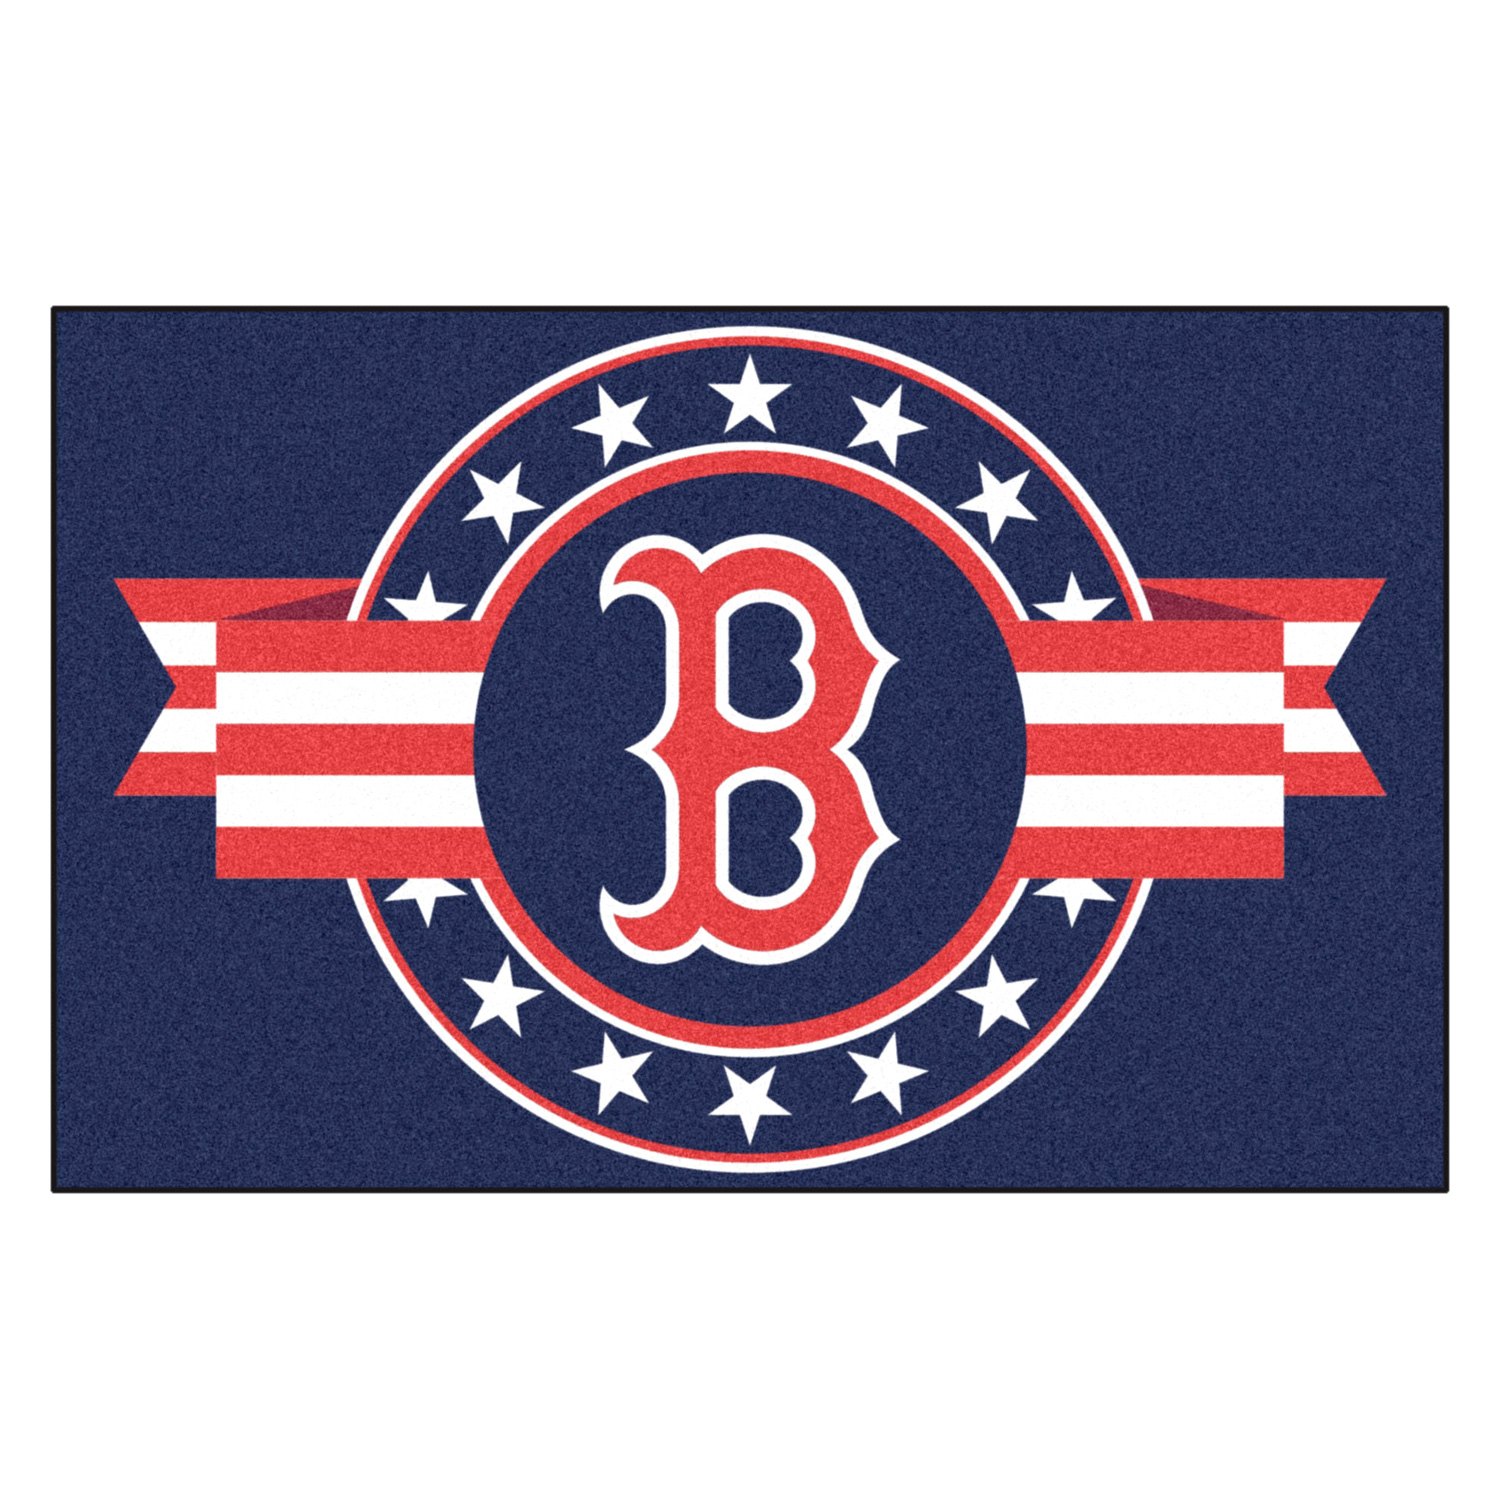 Officially Licensed MLB Boston Red Sox Uniform Mat 19 x 30